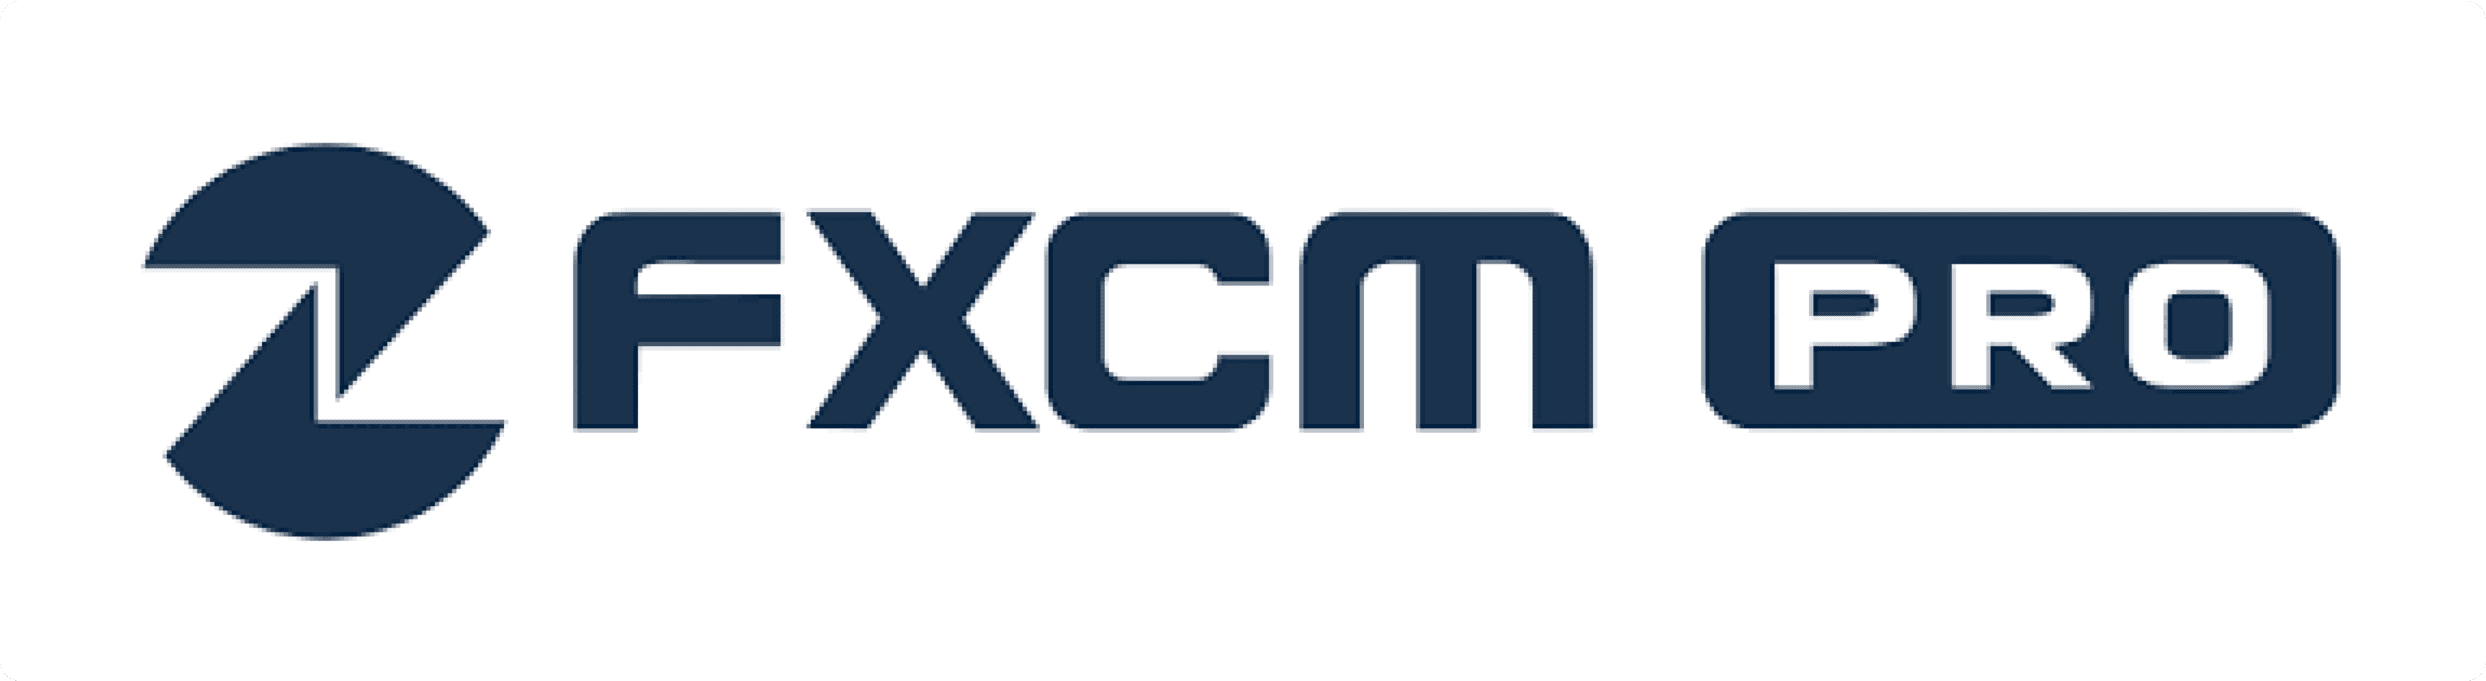 FXCRM pro liquidity provider